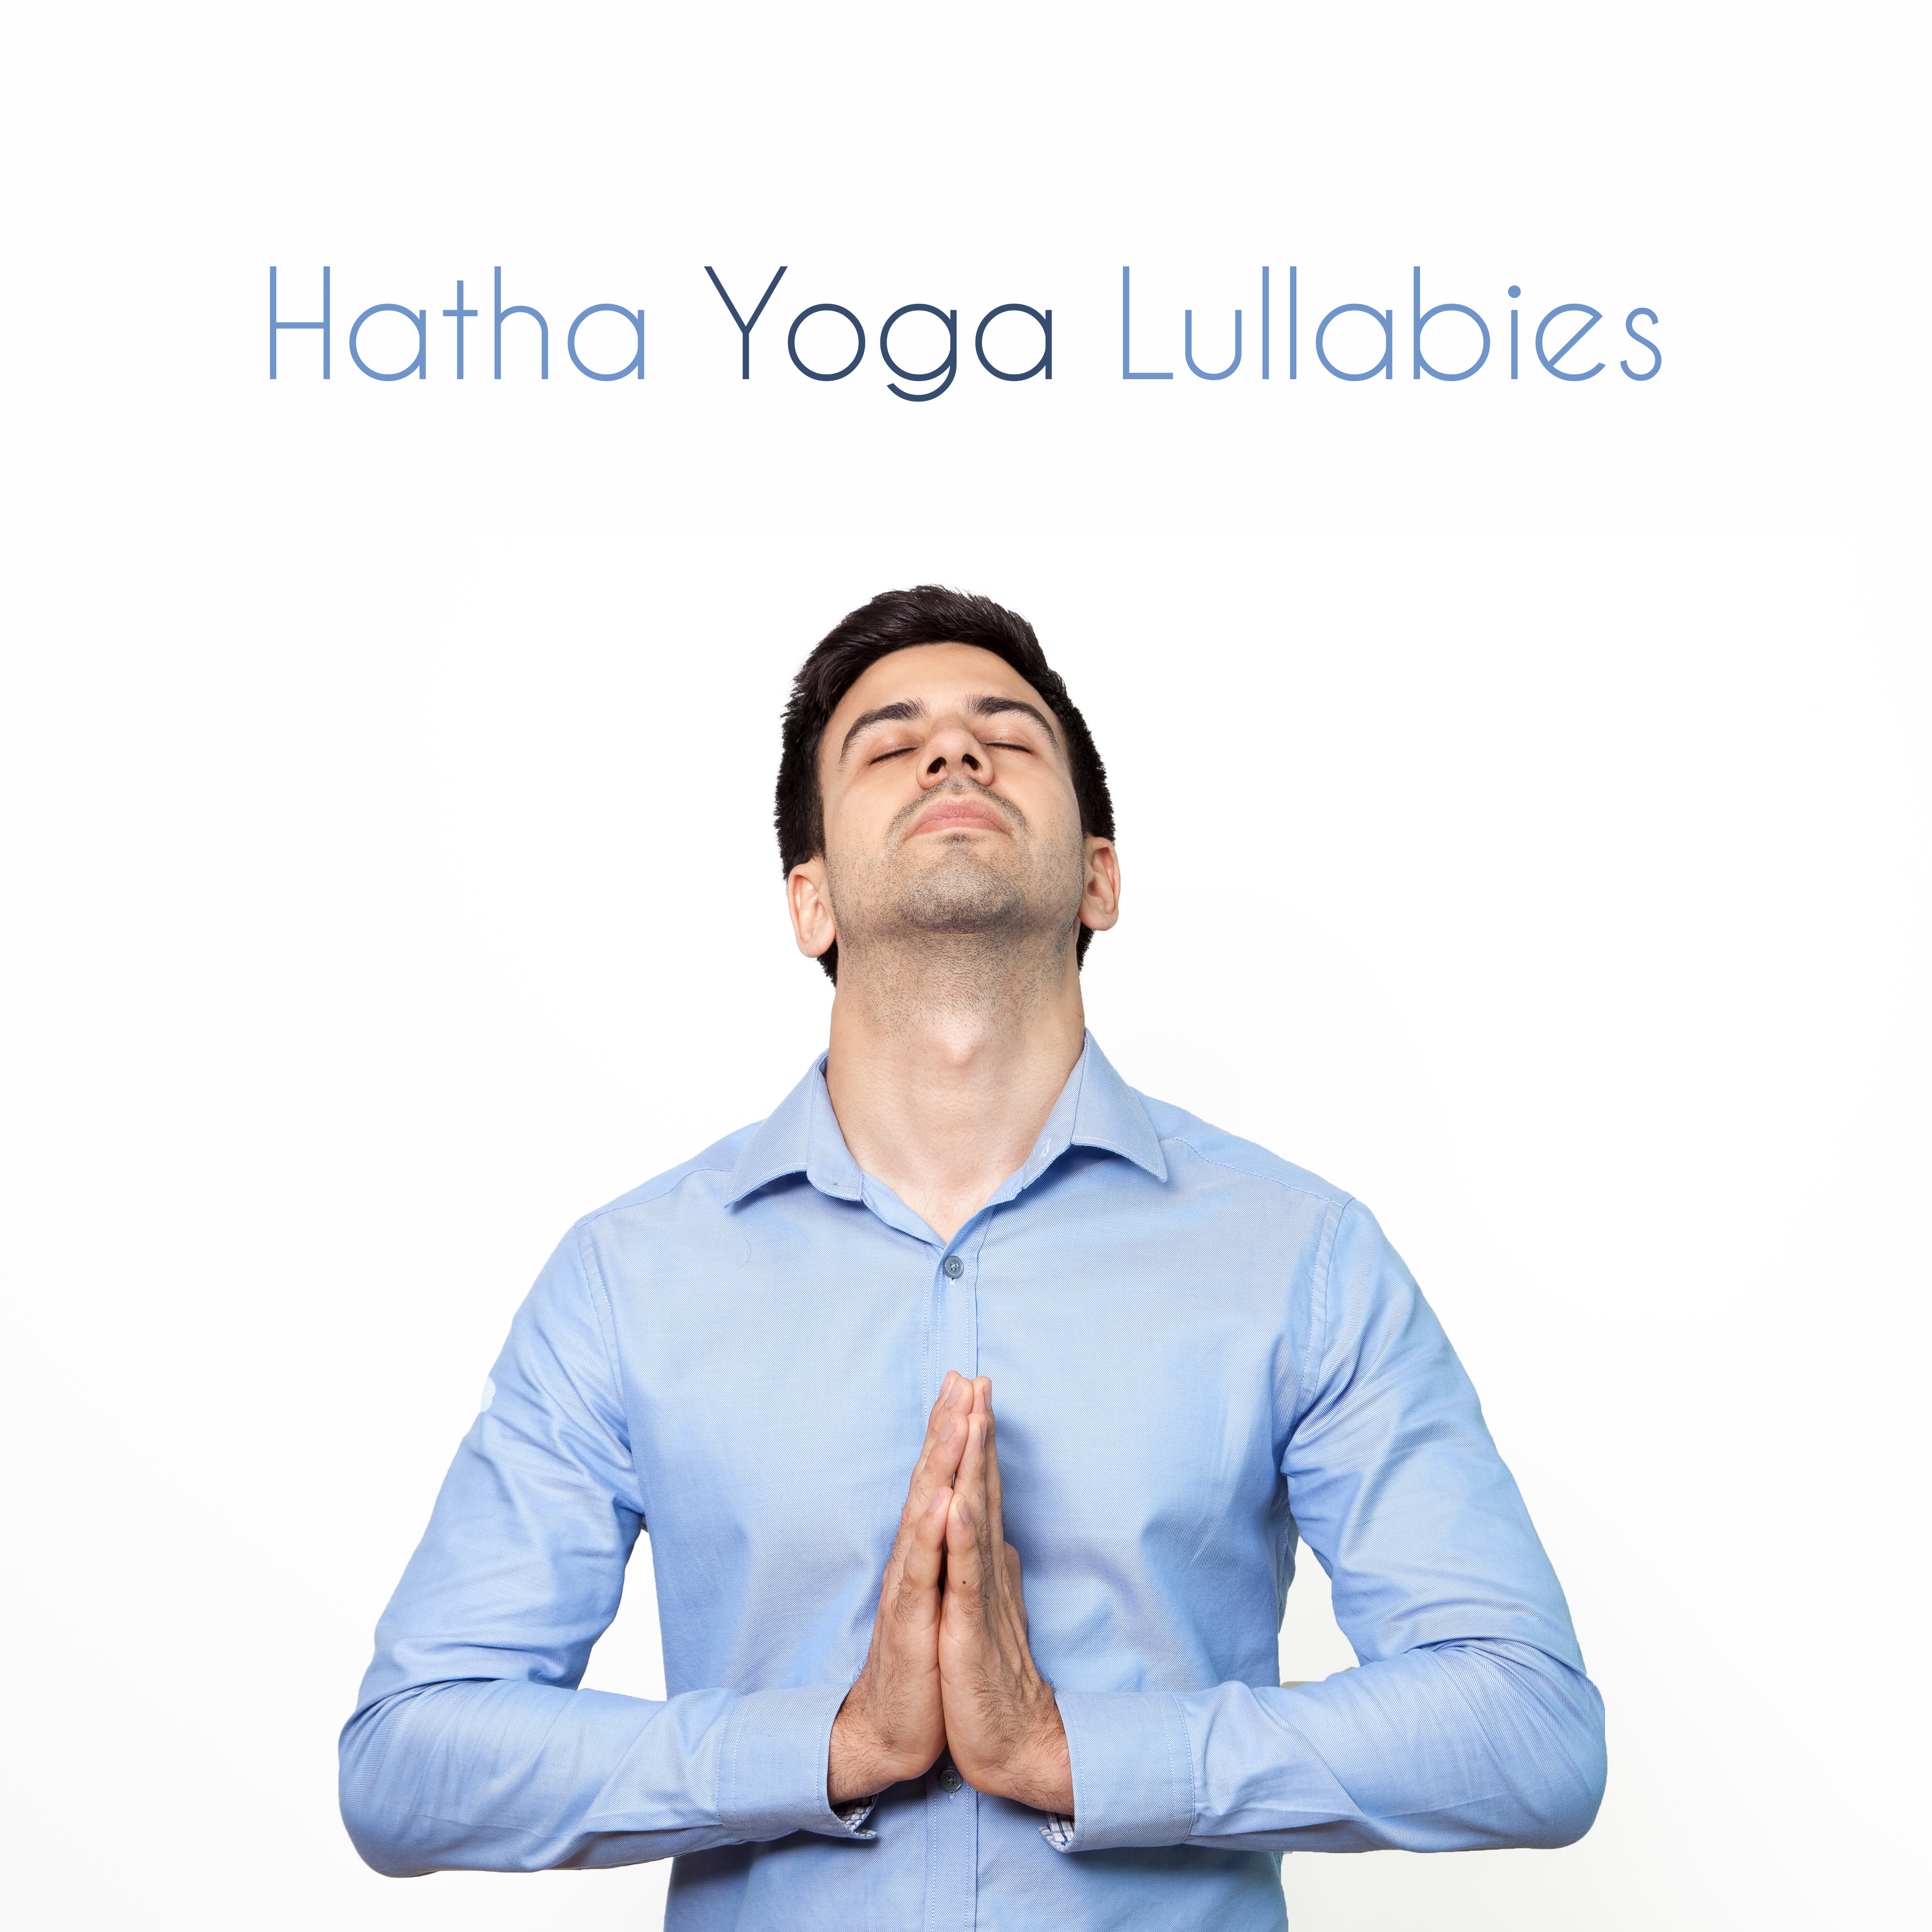 Hatha Yoga Lullabies